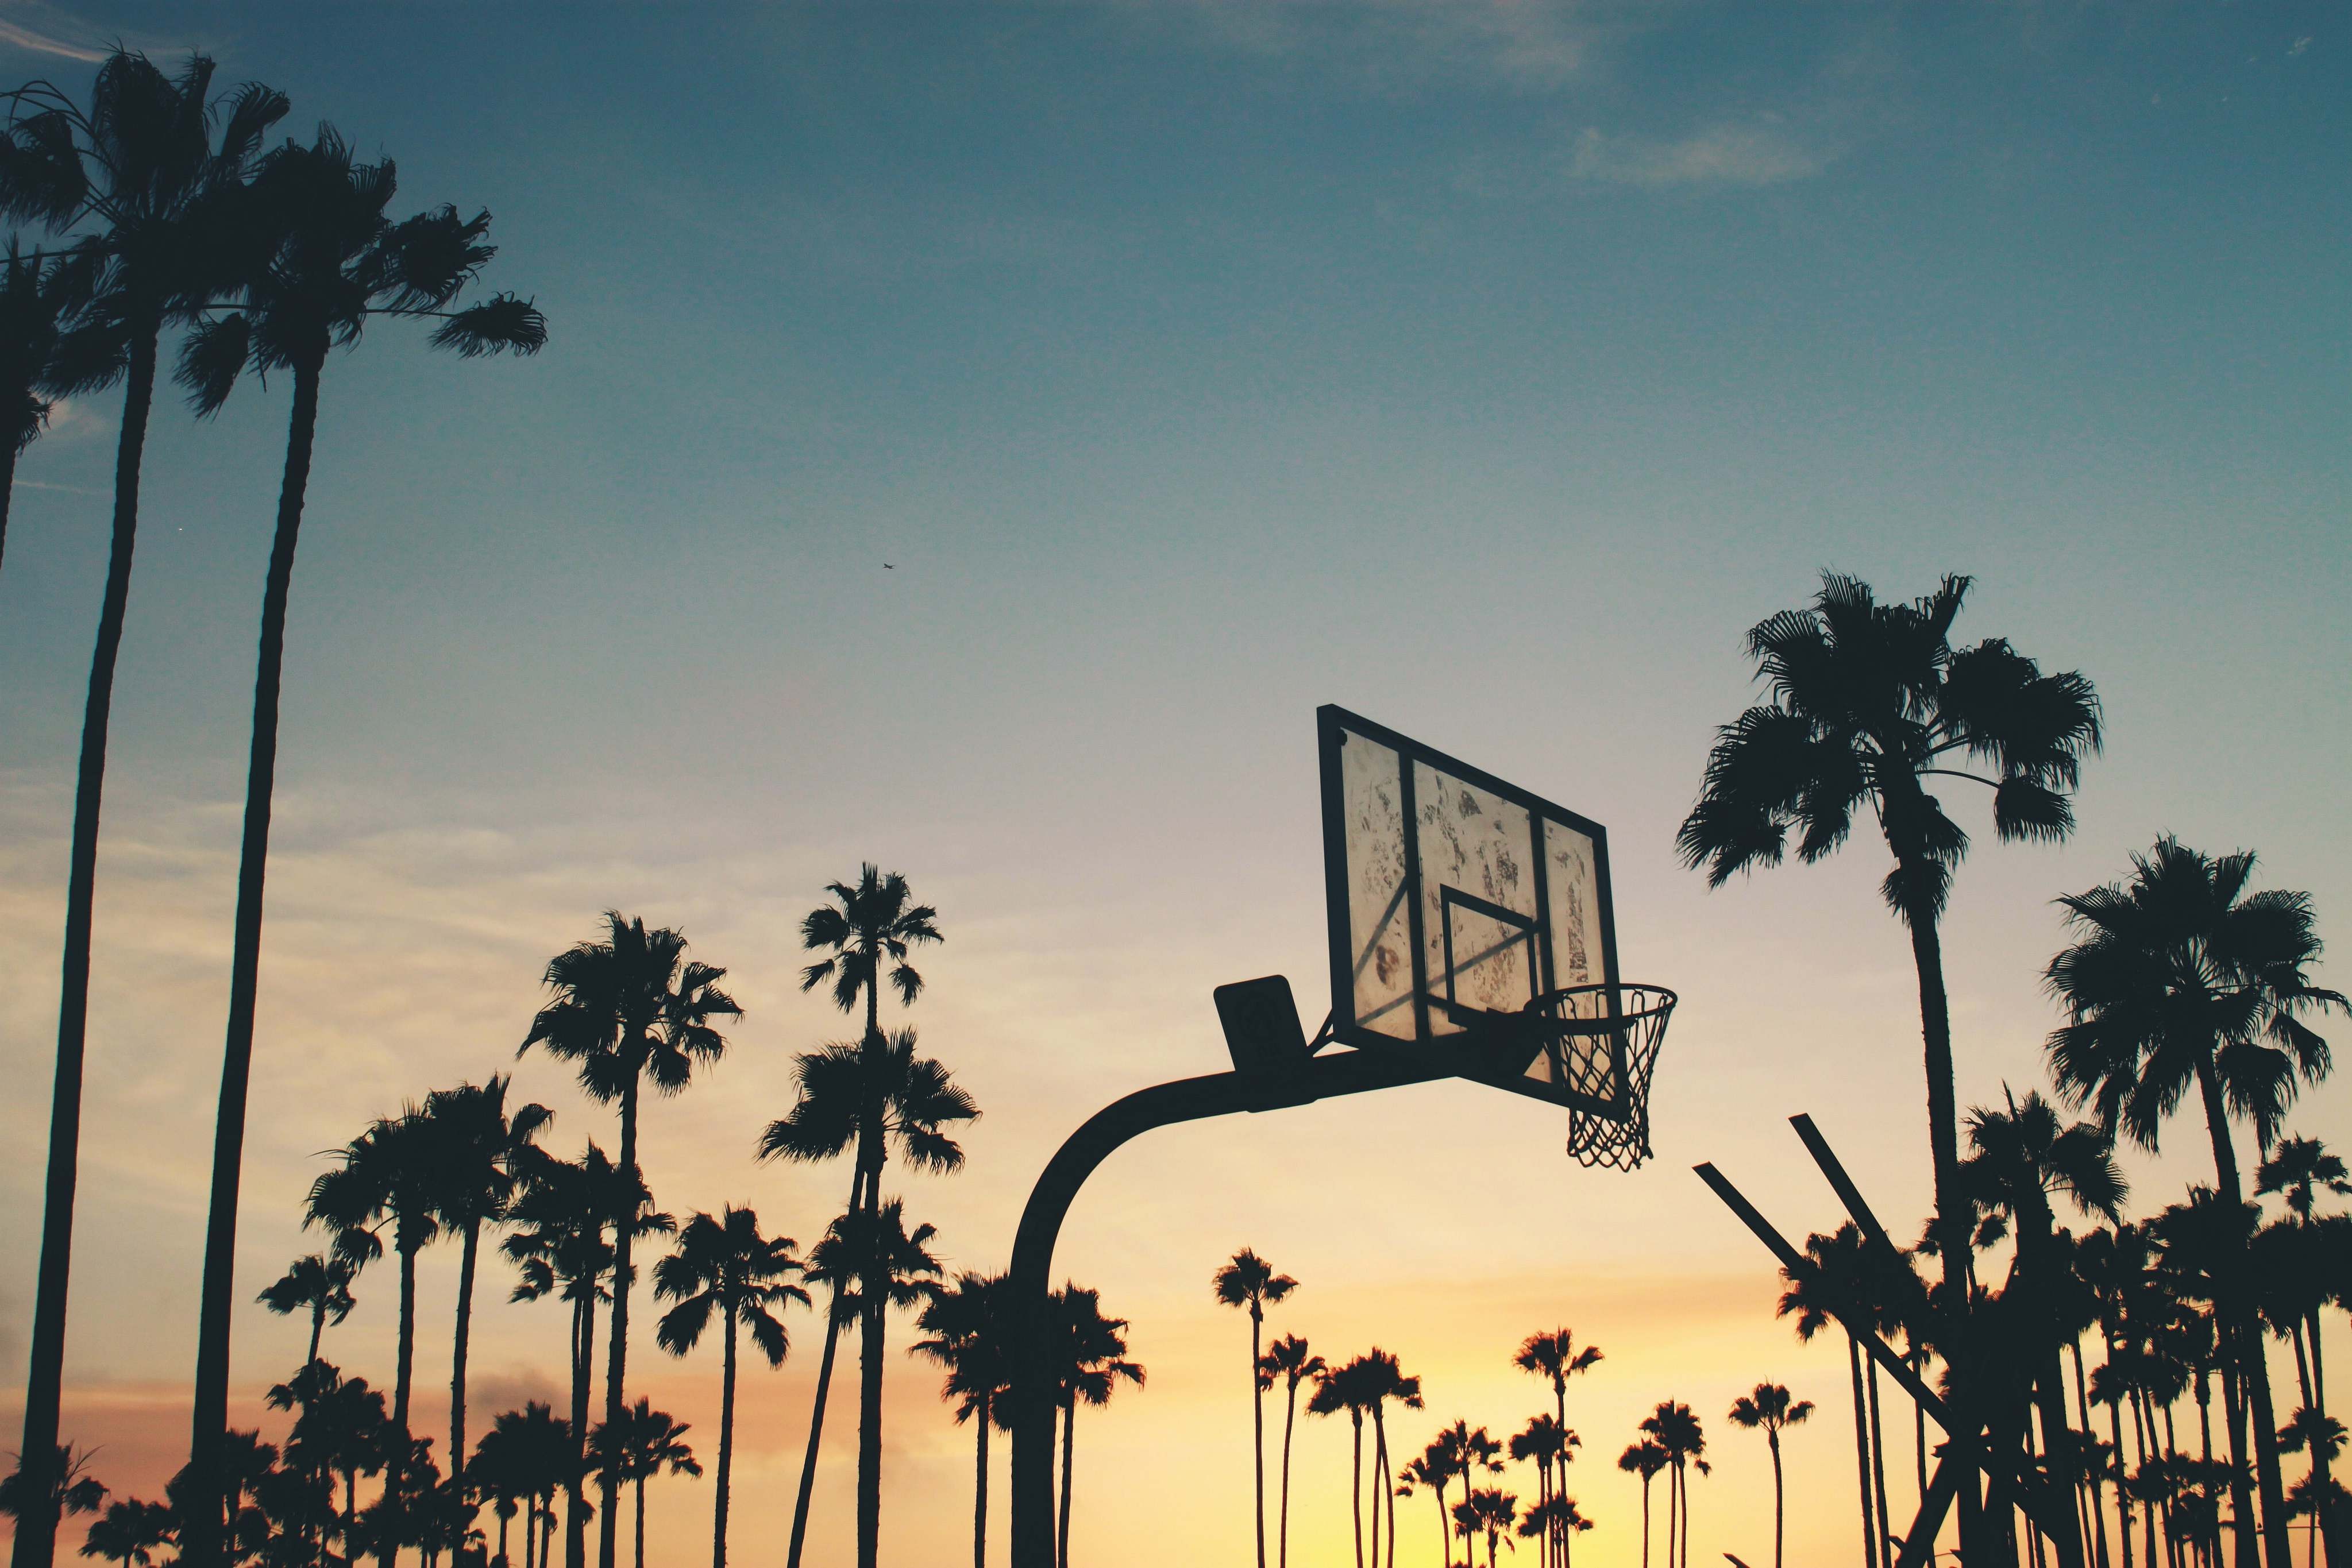 Tree Silhouette Photo Of Basketball System Palm Tree Image Free Photo